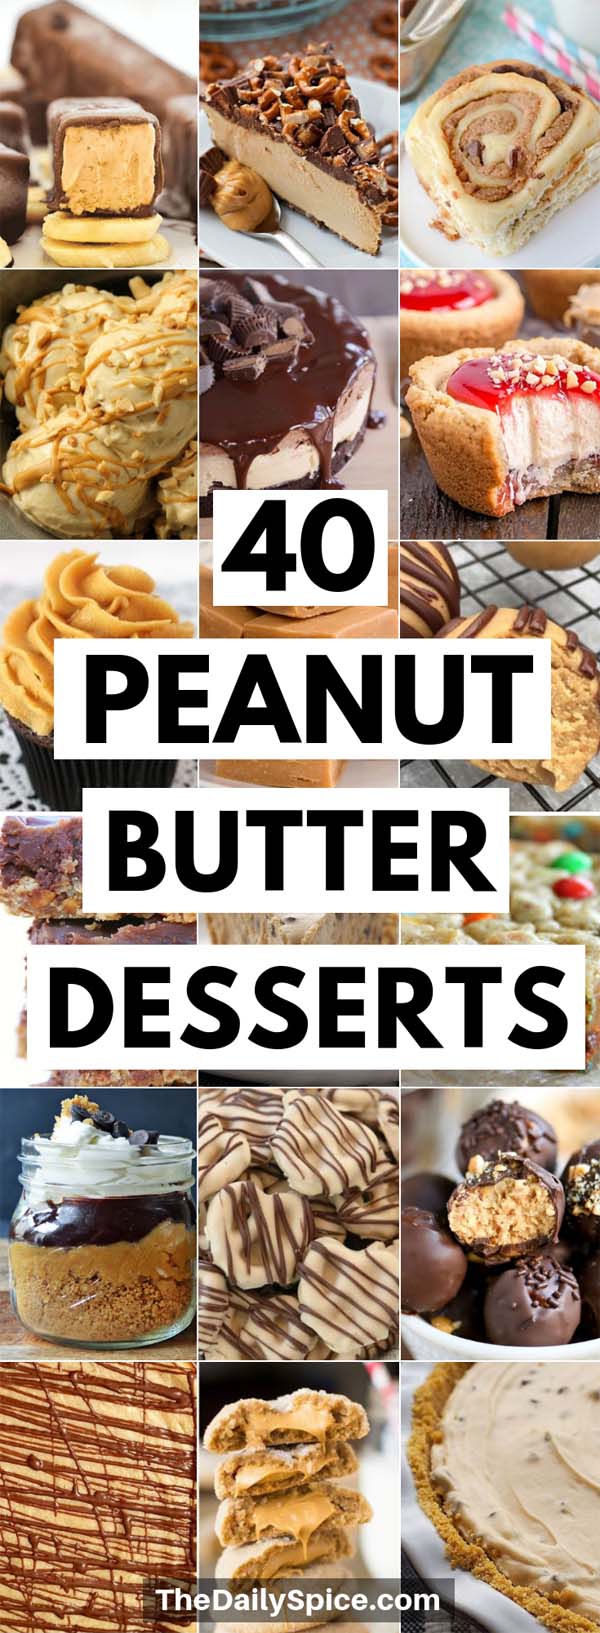 Peanut butter desserts 